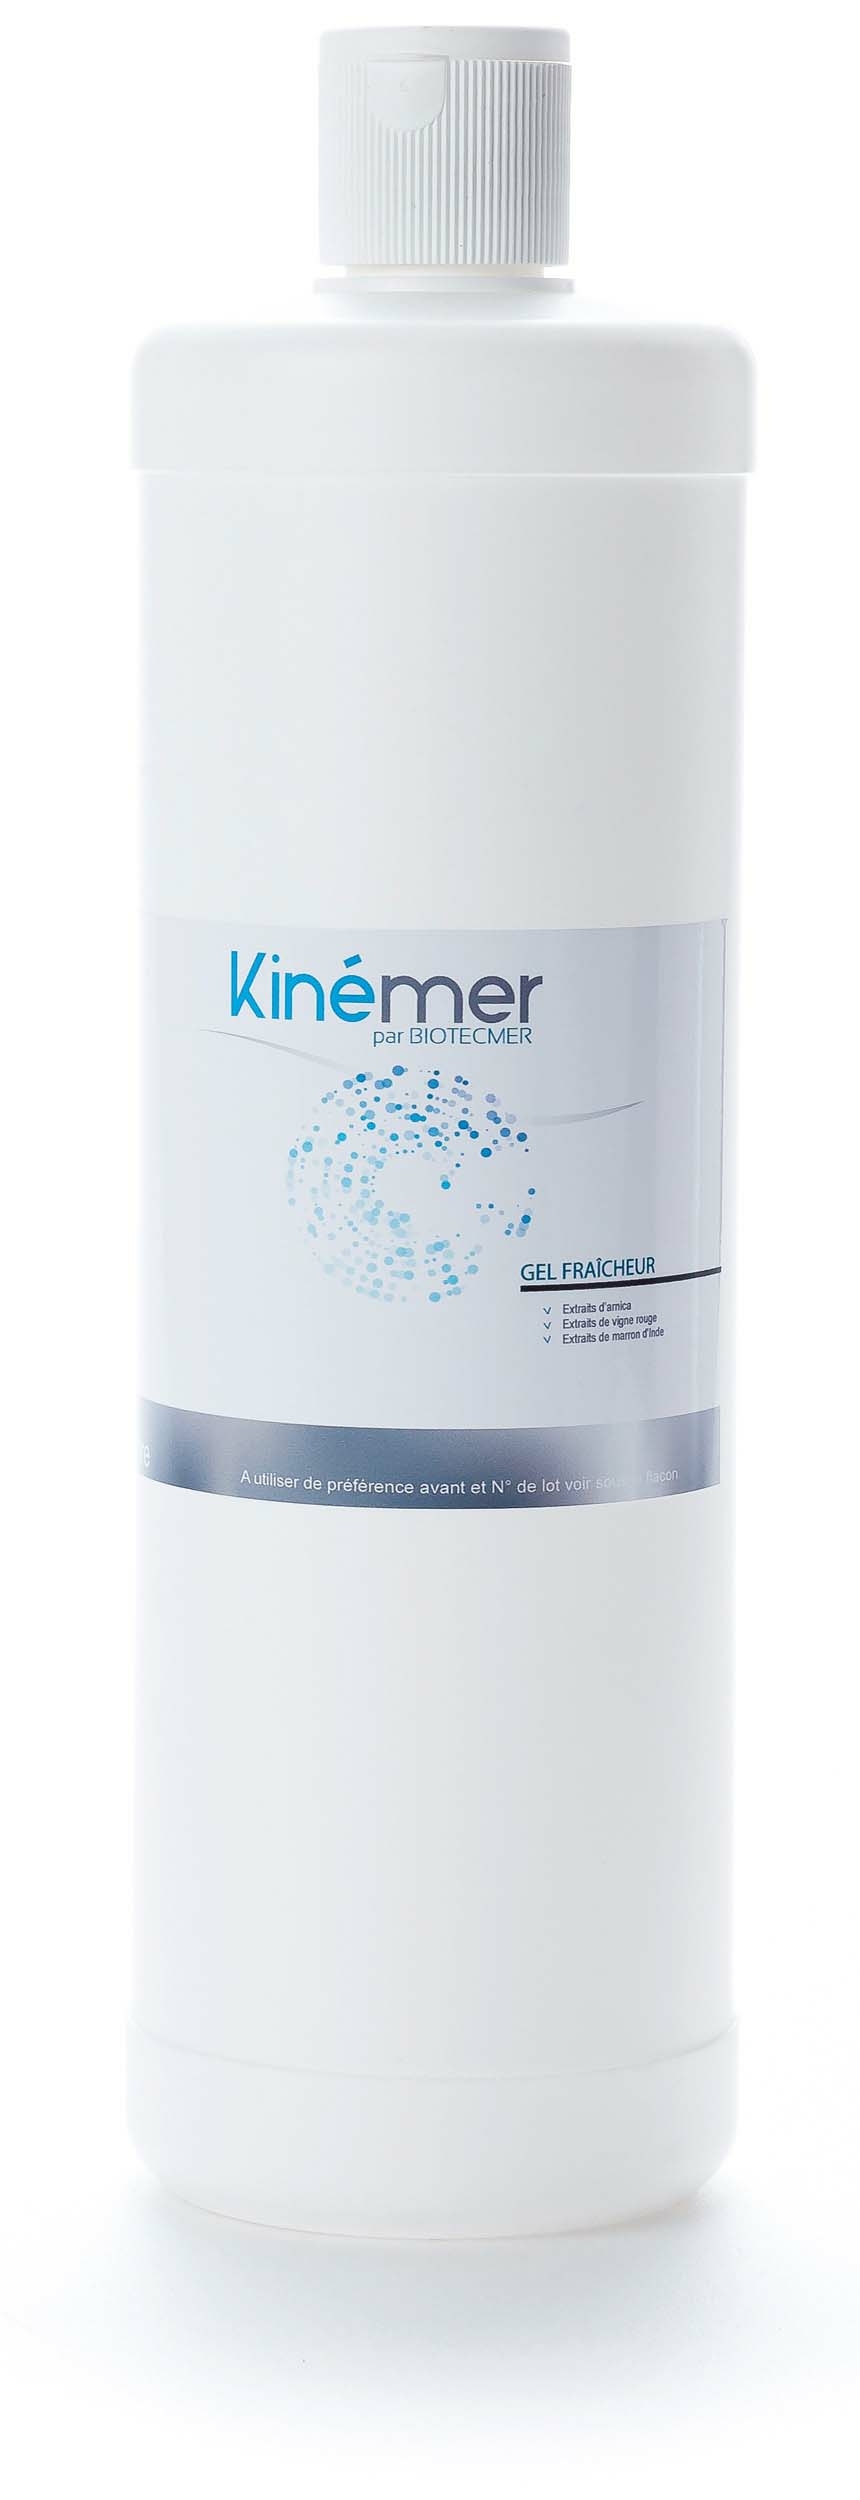 gel jambes lourdes gel fraicheur kinemer biotecmer flacon de un litre tablelya 2101054000-1